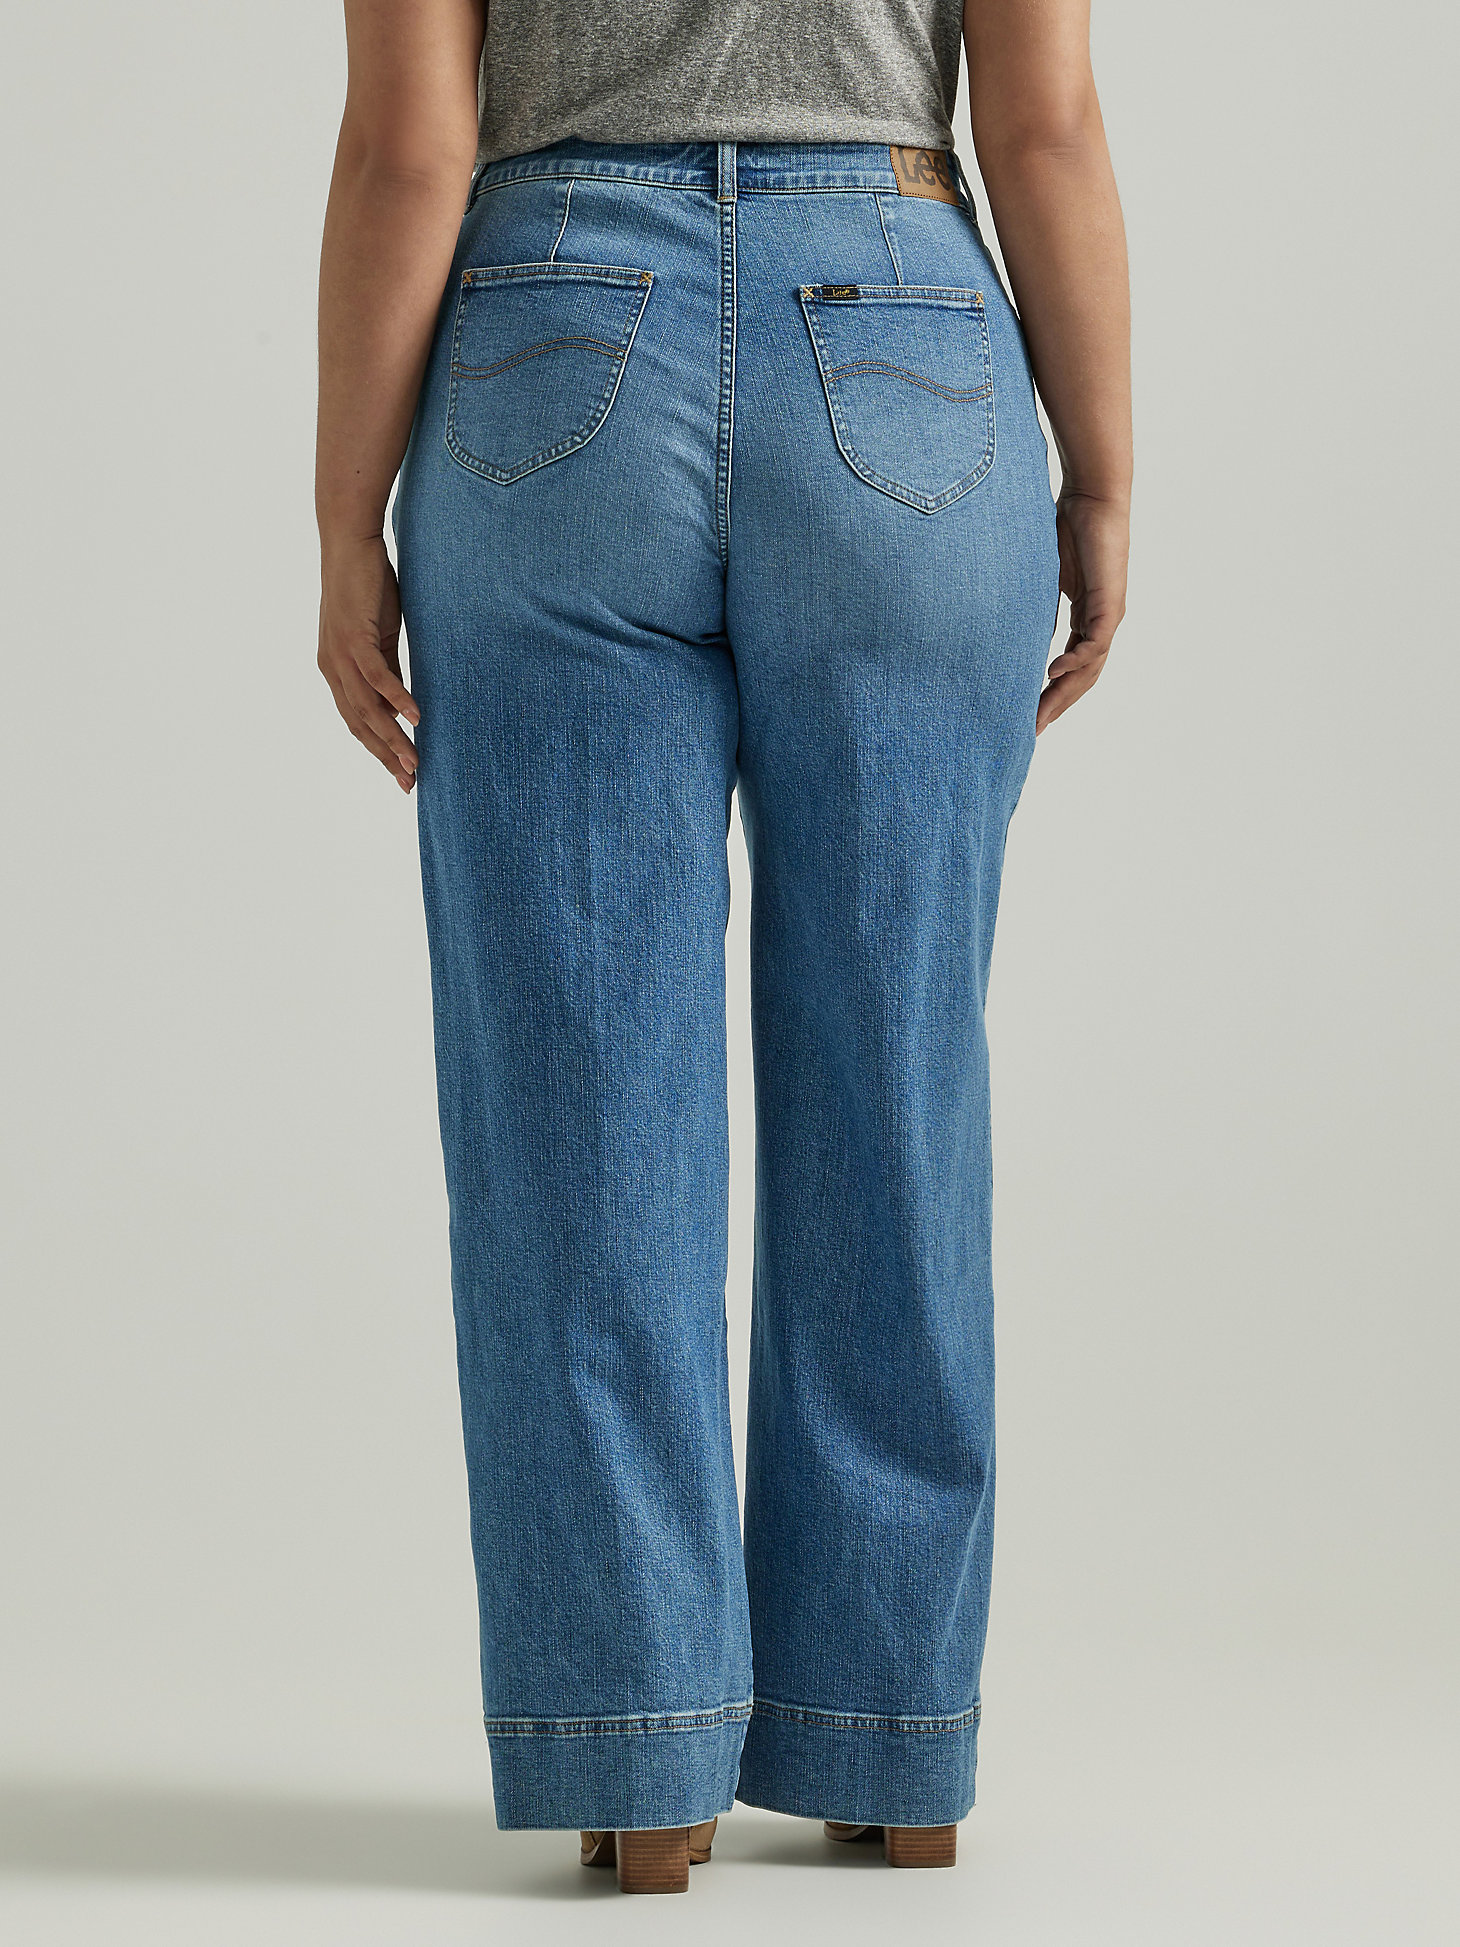 Women's Legendary Trouser Jean (Plus) in Elevated Retro Blue alternative view 2